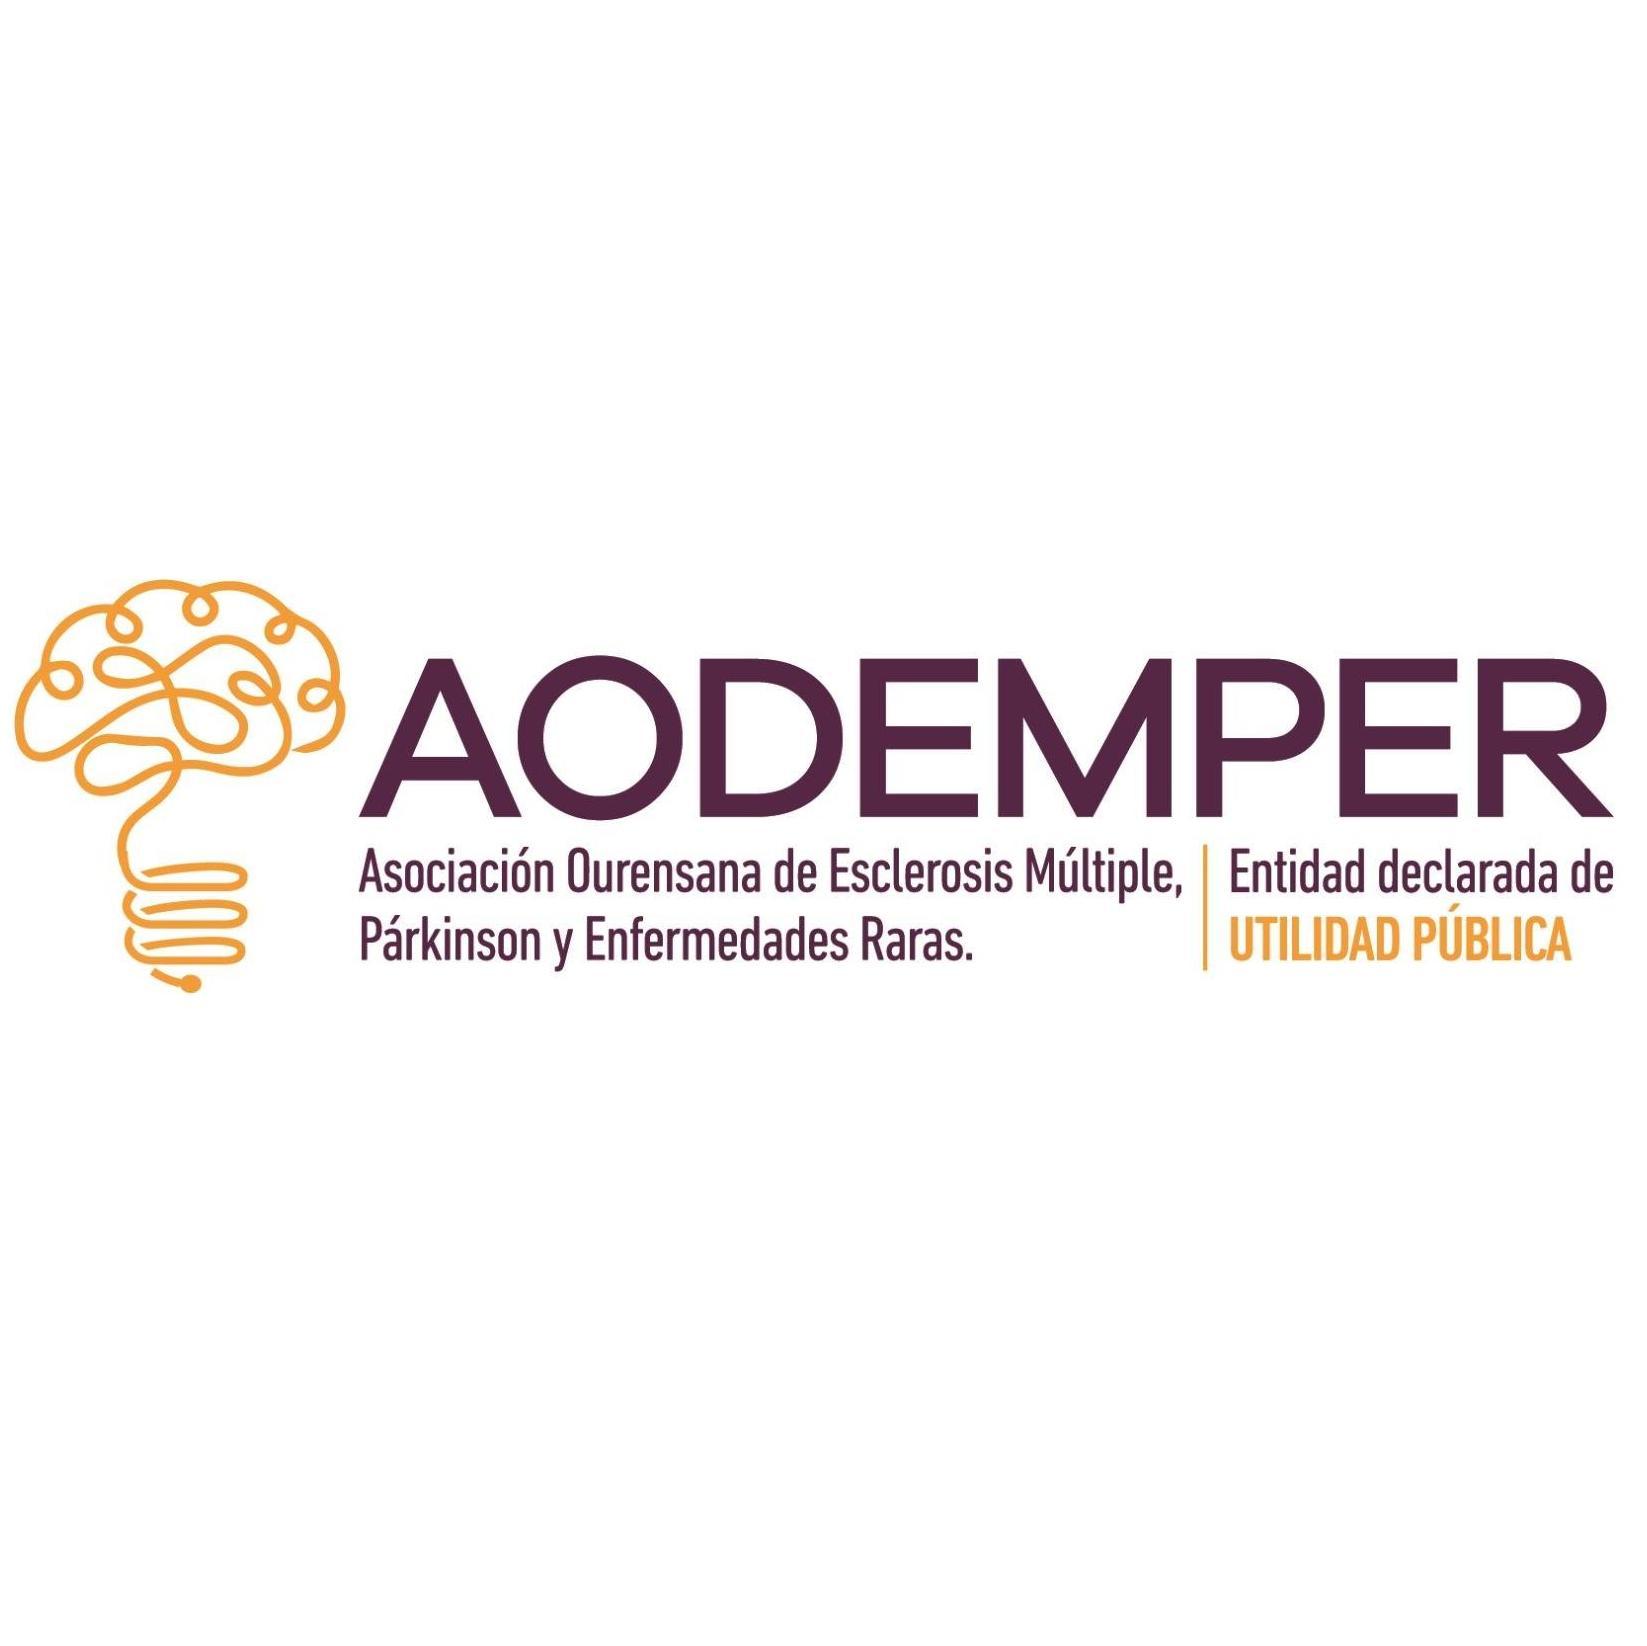 AODEMPER - Asociación Ourensana de Esclerosis Múltiple, ELA, Parkinson y otras enfermedades - El teu perfil. Vota, valora i comunica’t